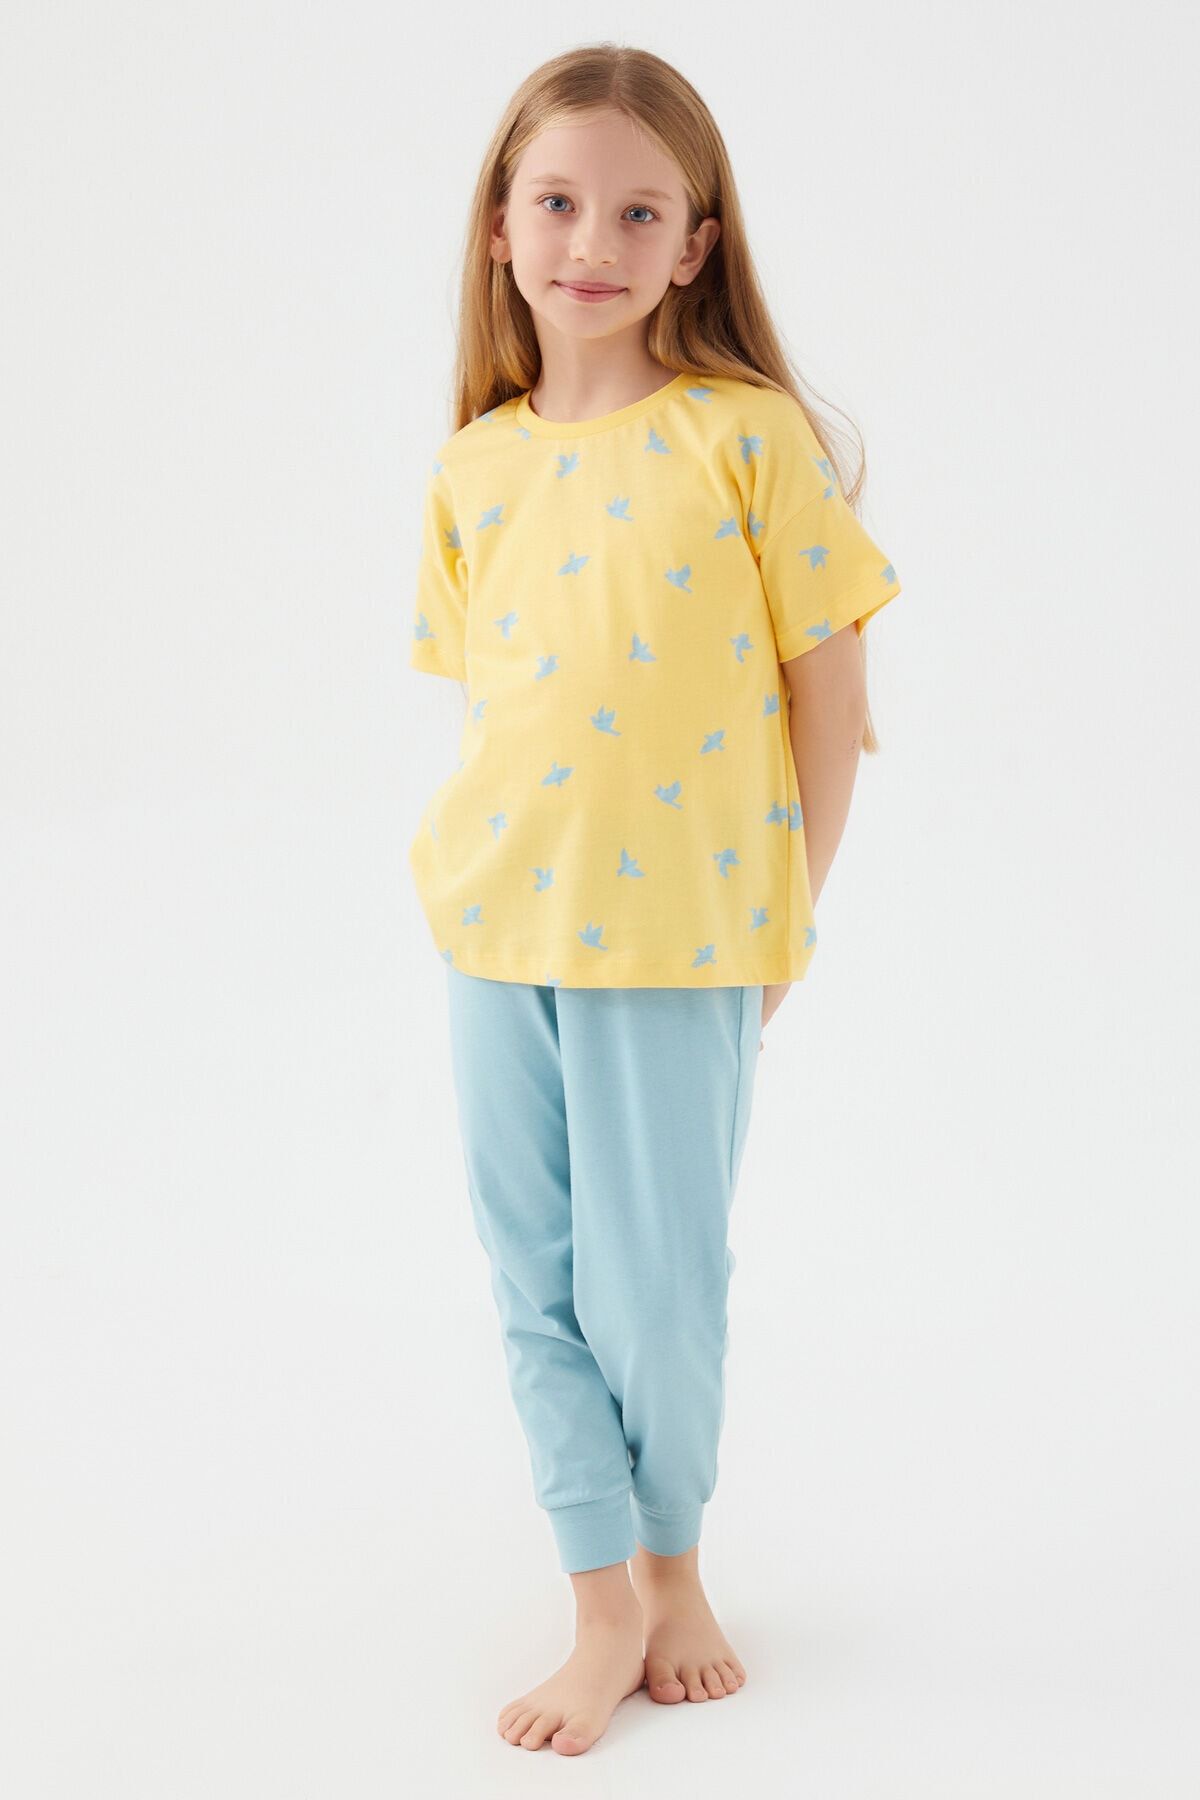 Rolypoly Rolypoly Flying Sarı Kız Çocuk Kısa Kol Pijama Takım